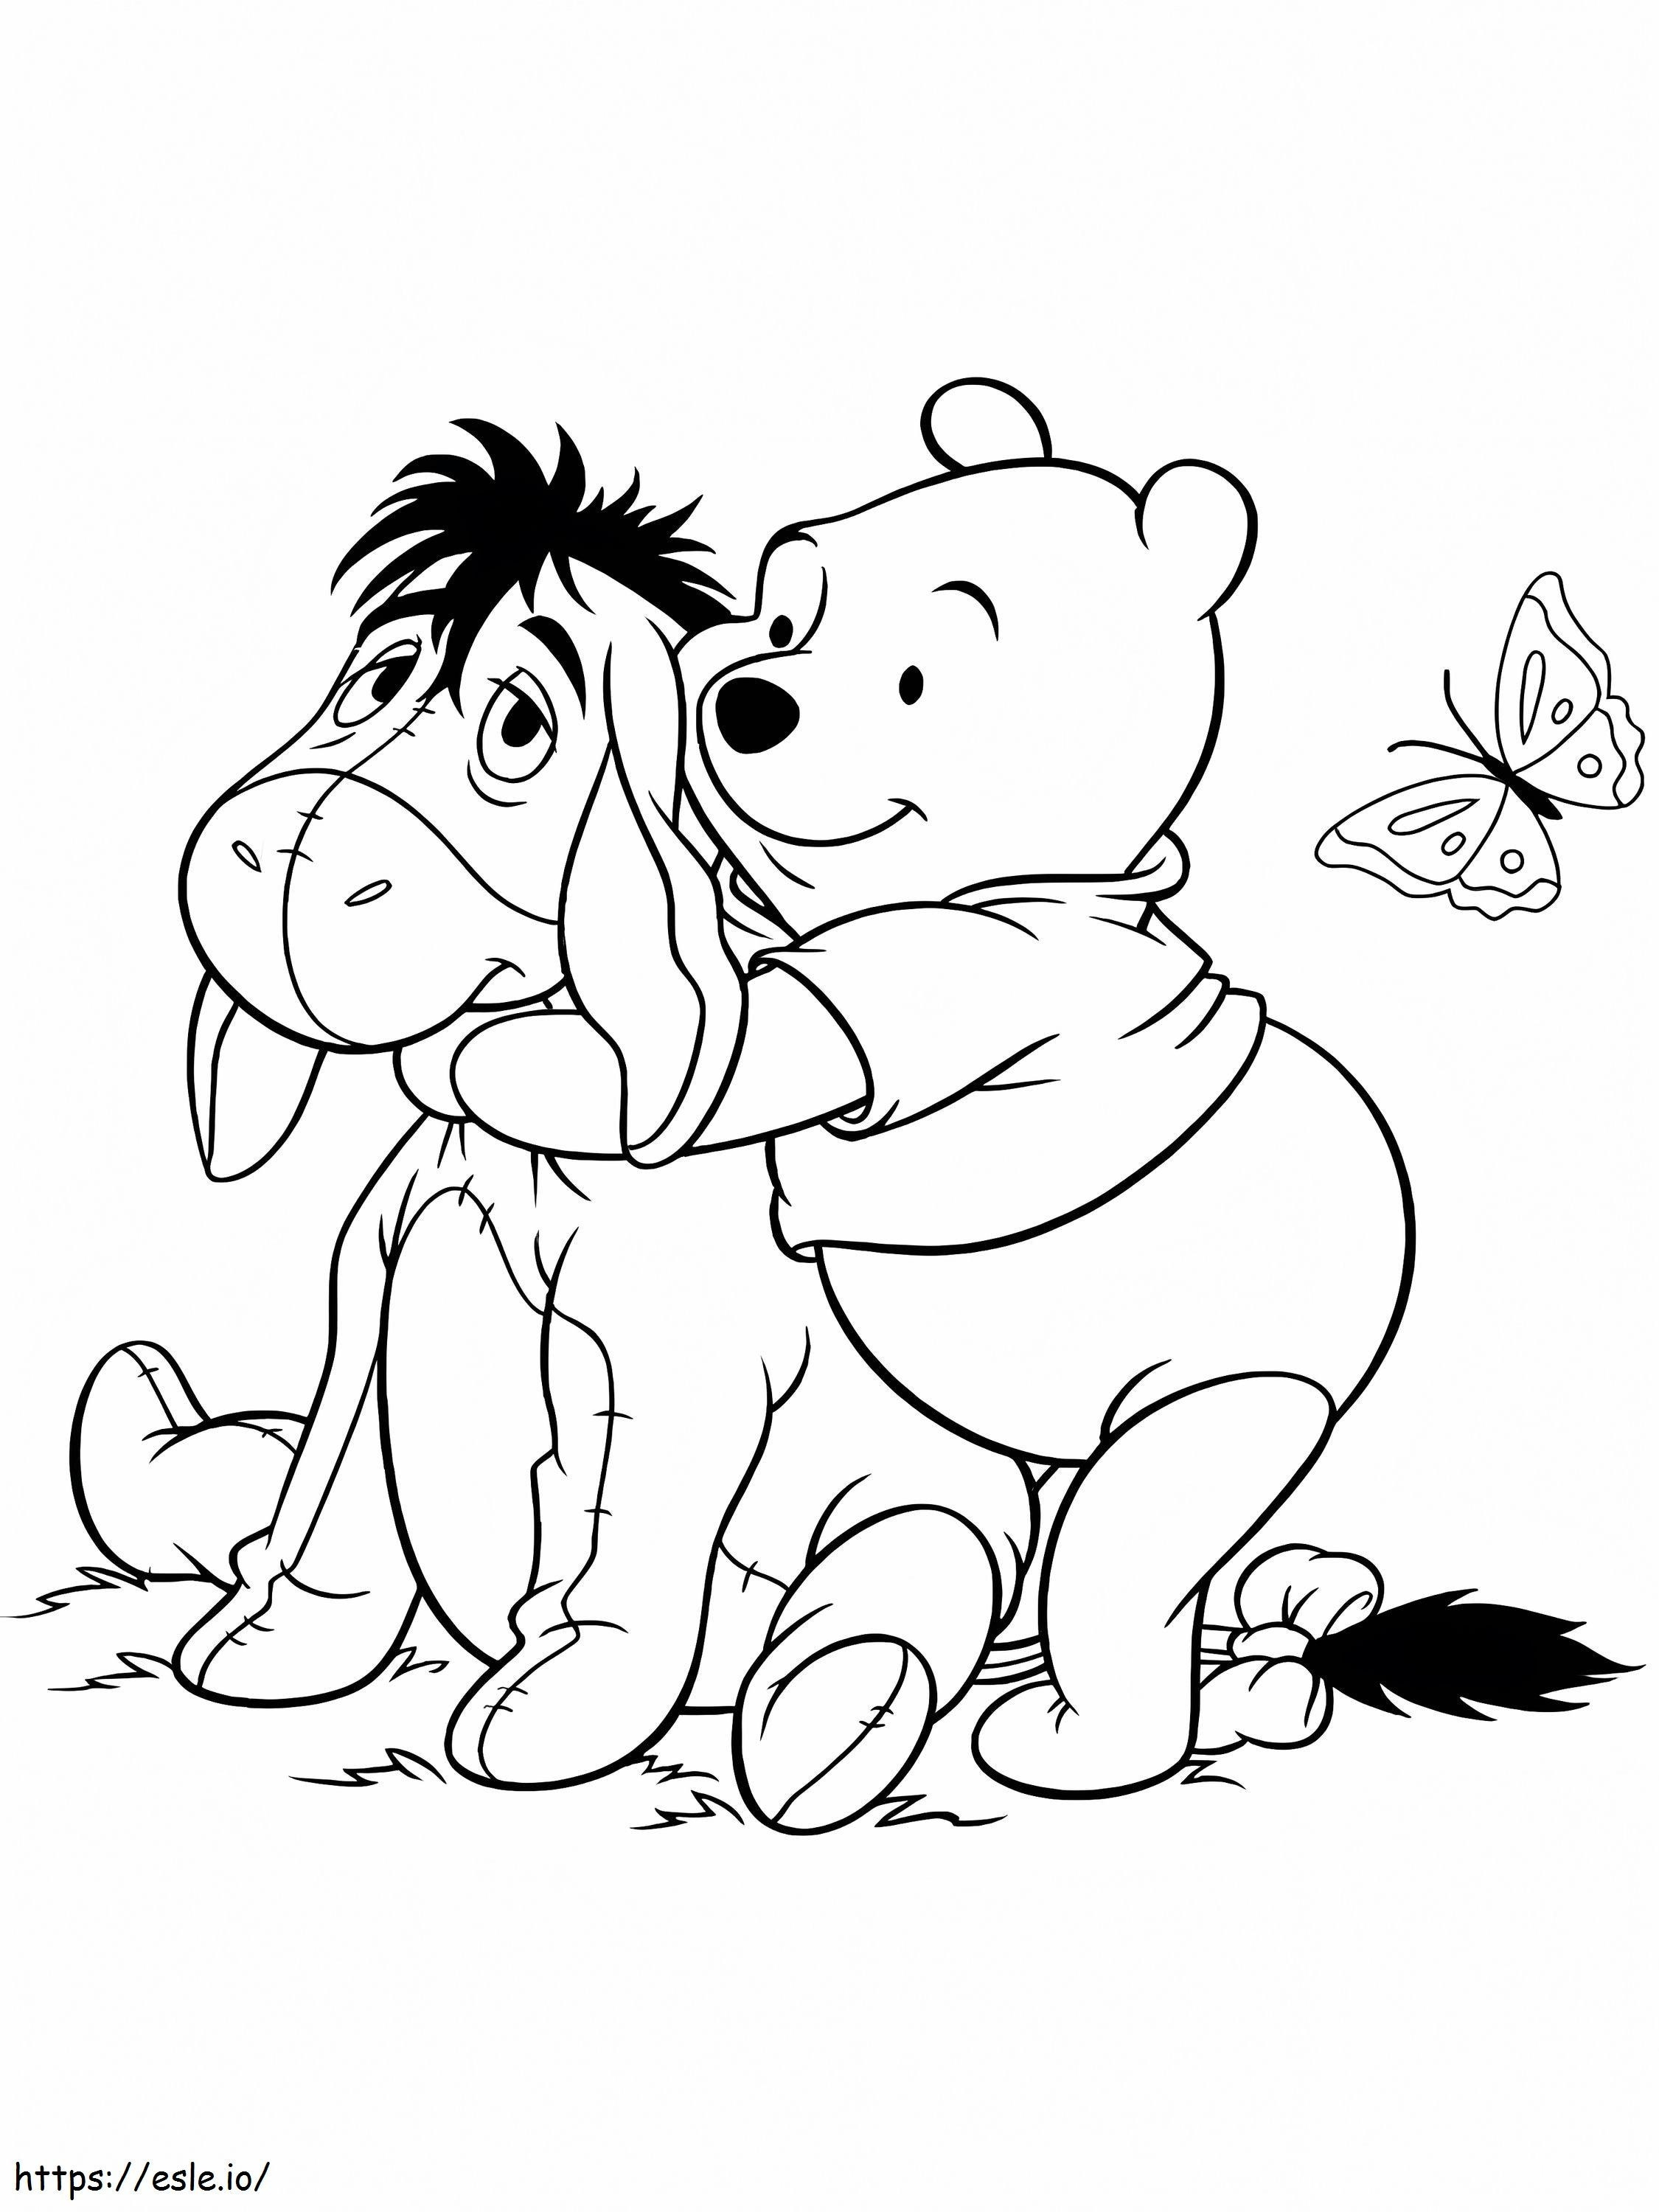 Winnie De Pooh abrazando a Eeyore para colorear